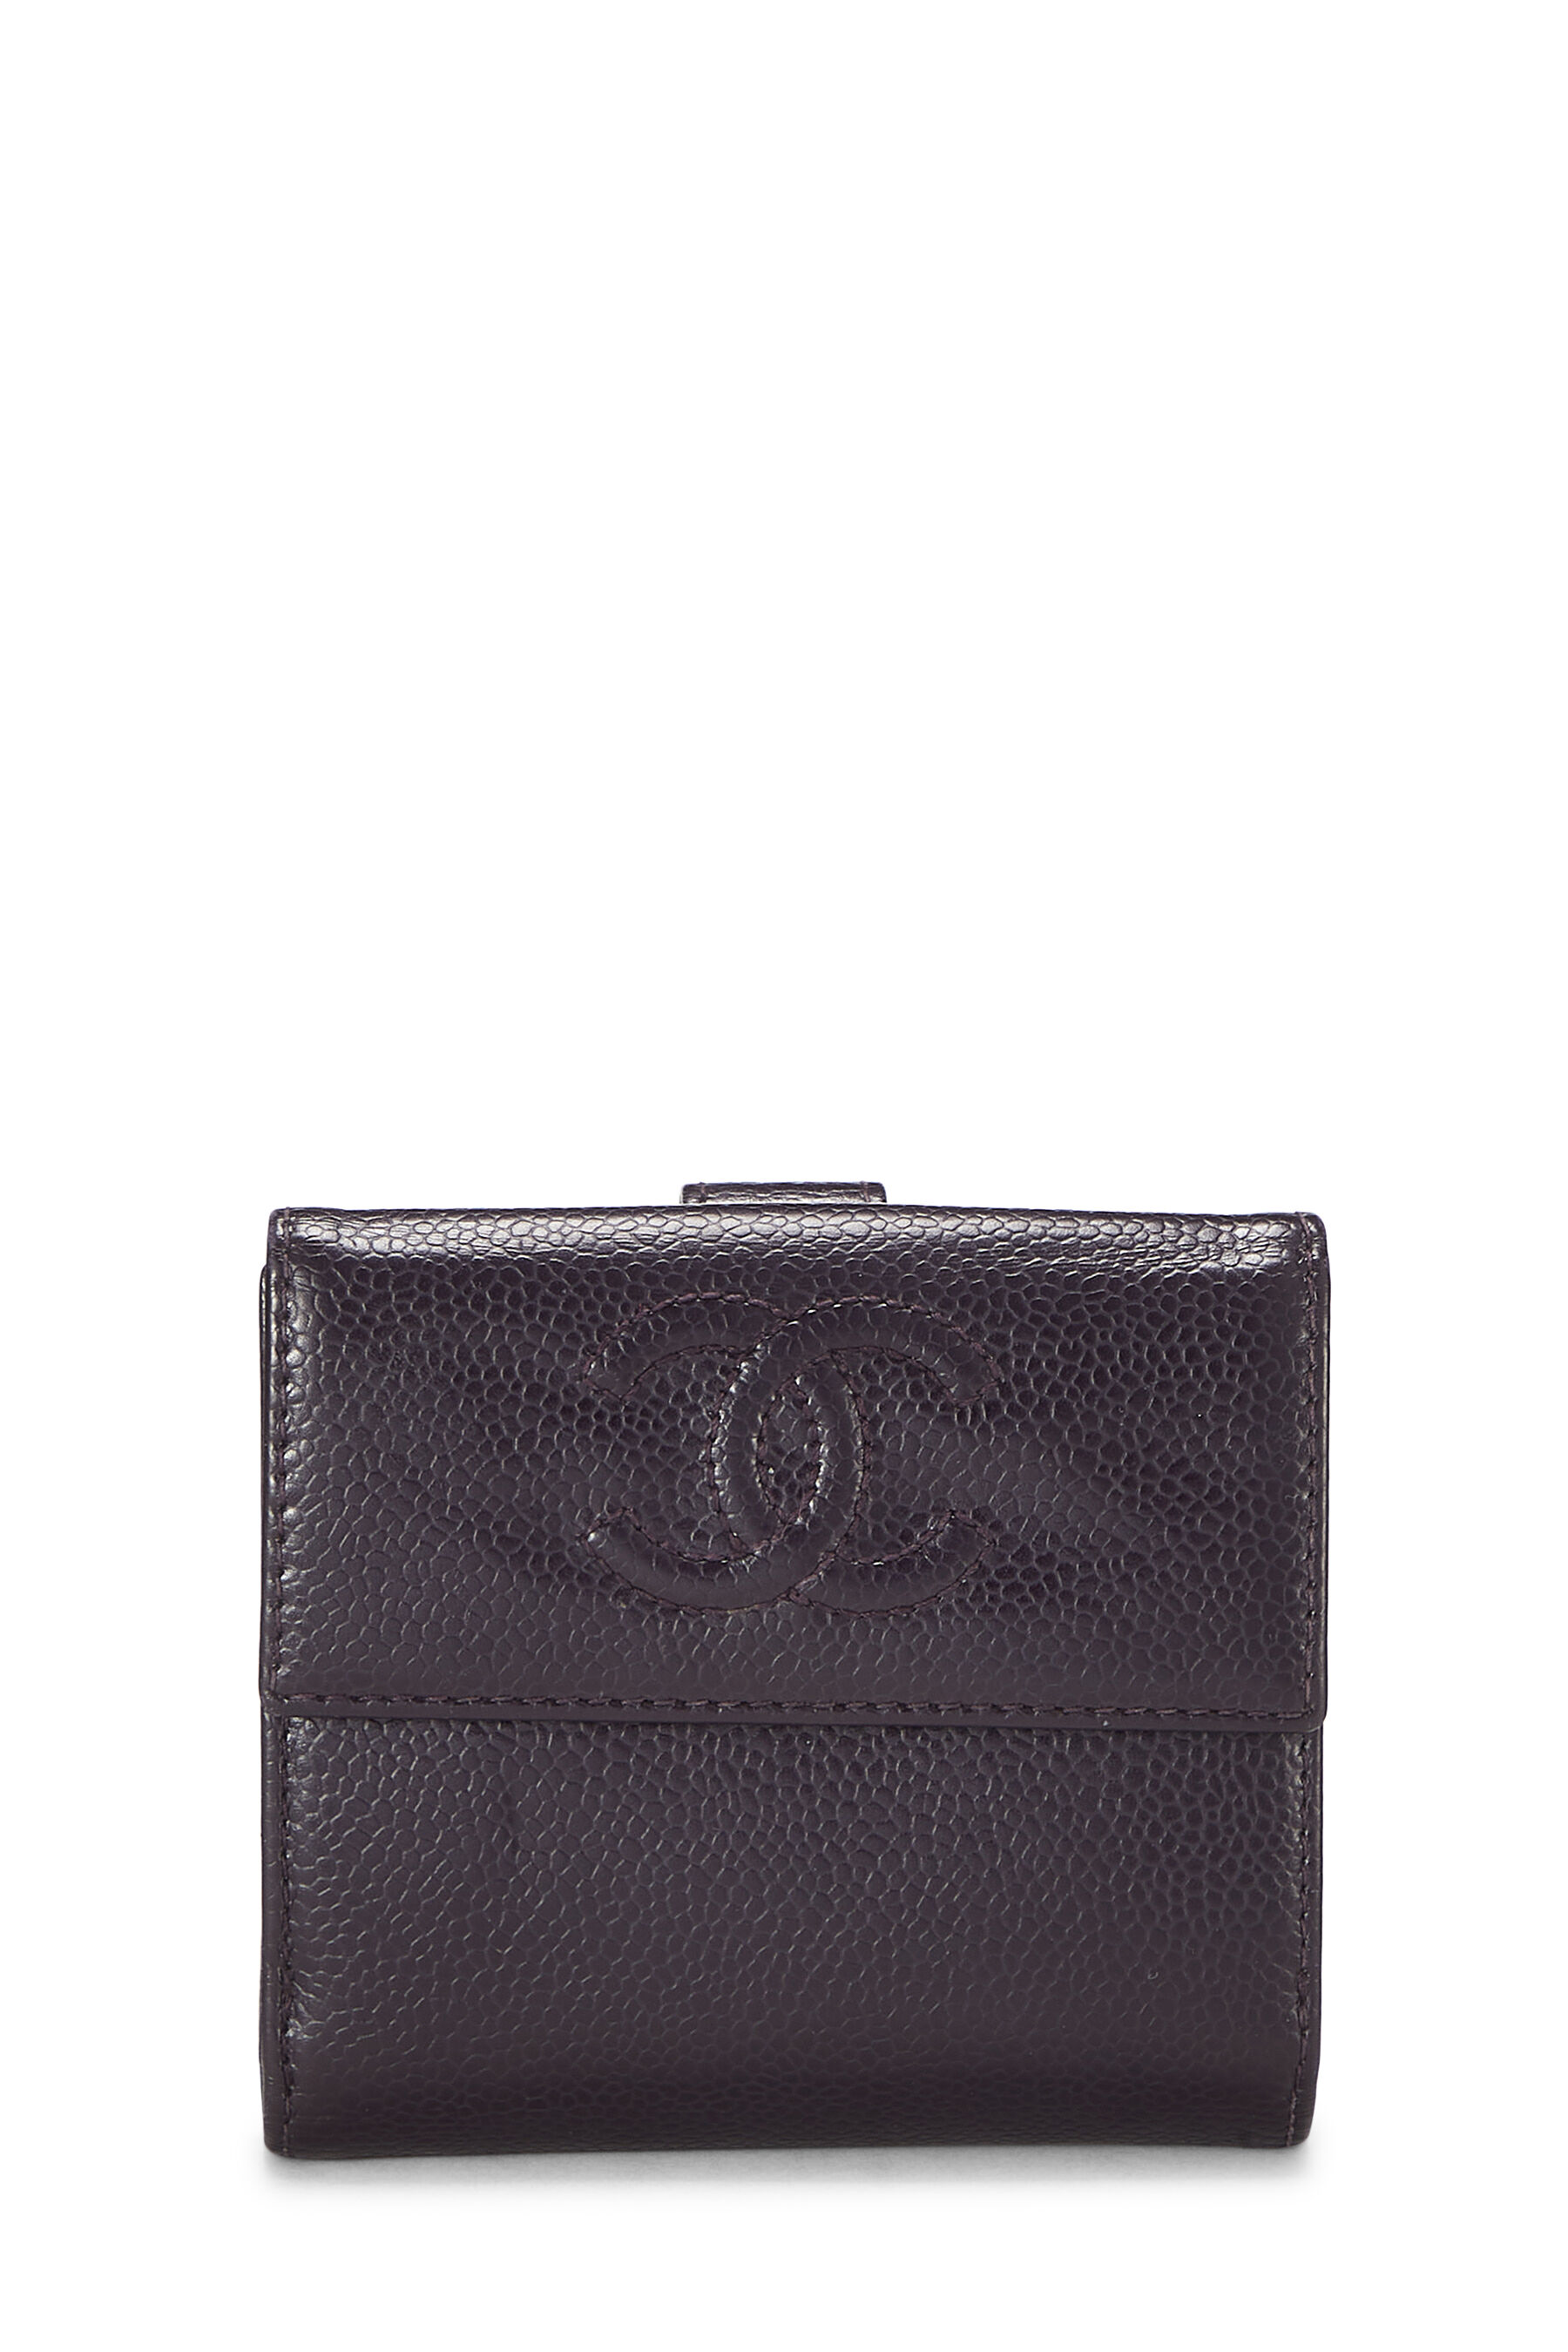 Chanel Purple Caviar Timeless 'CC' Compact Wallet Q6A2FV0FUB000